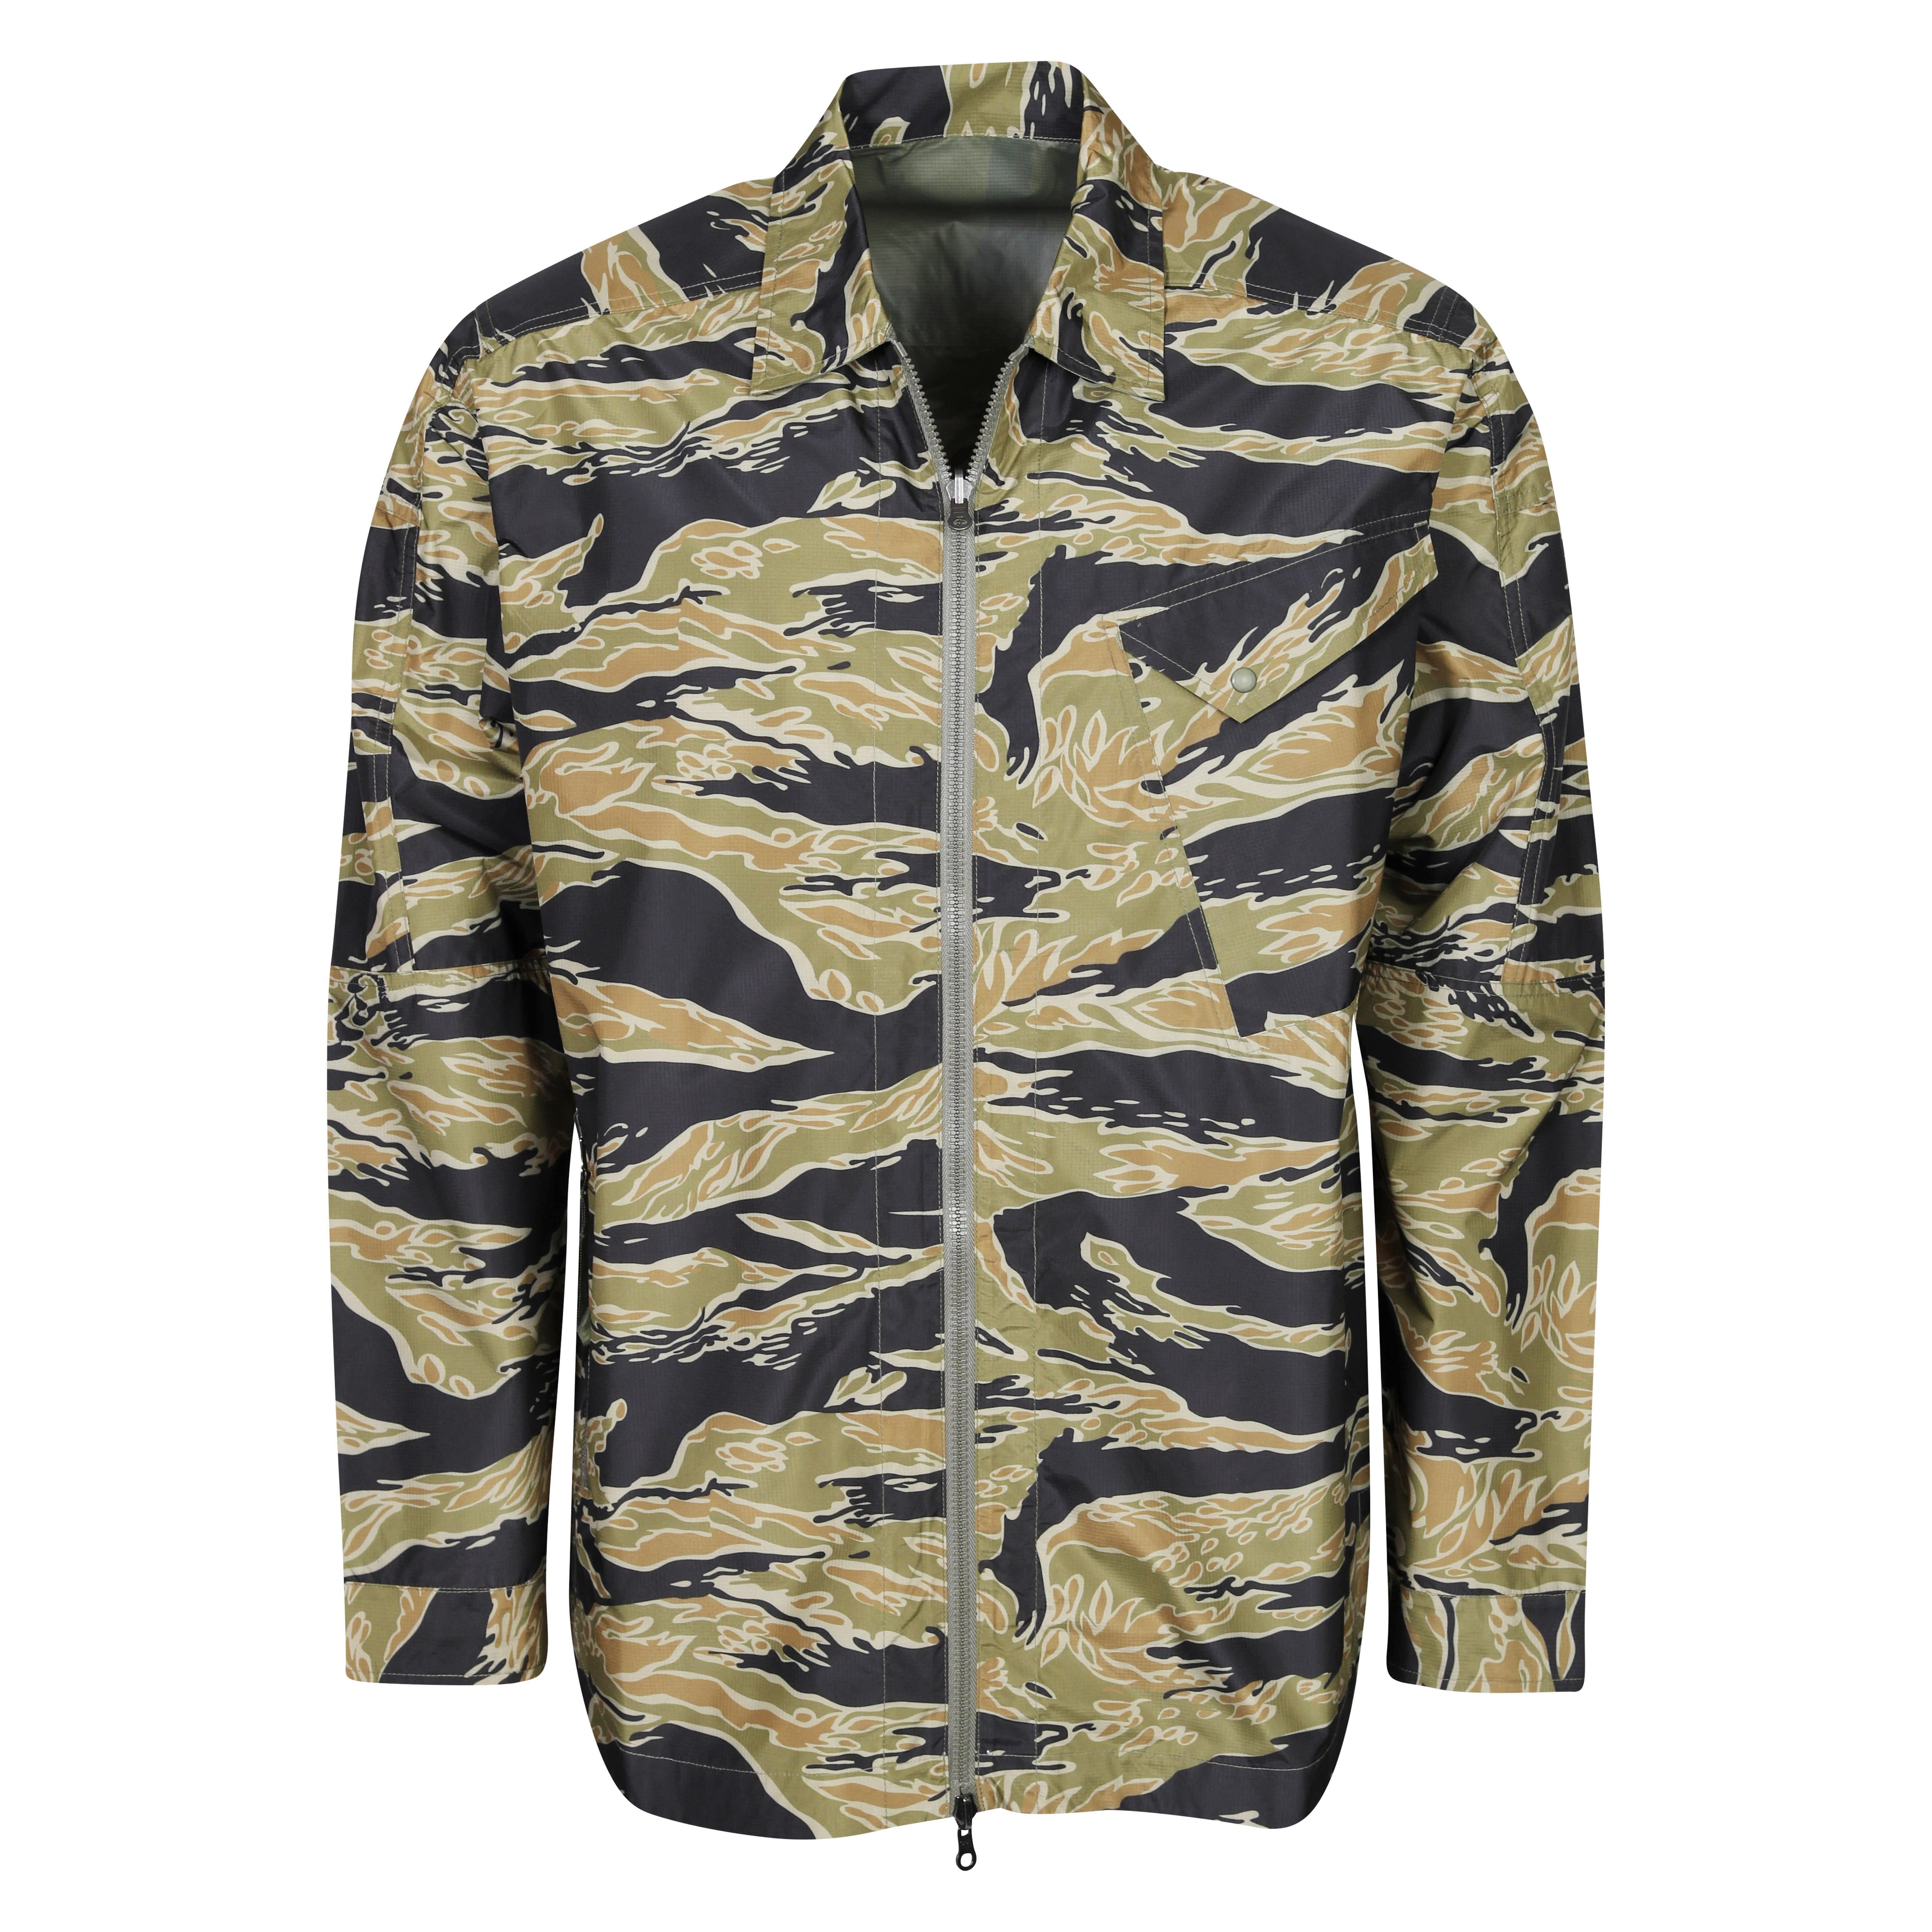 Maharishi Camo Reversible Packaway Shirt Jacket in Tigerstripe Olive